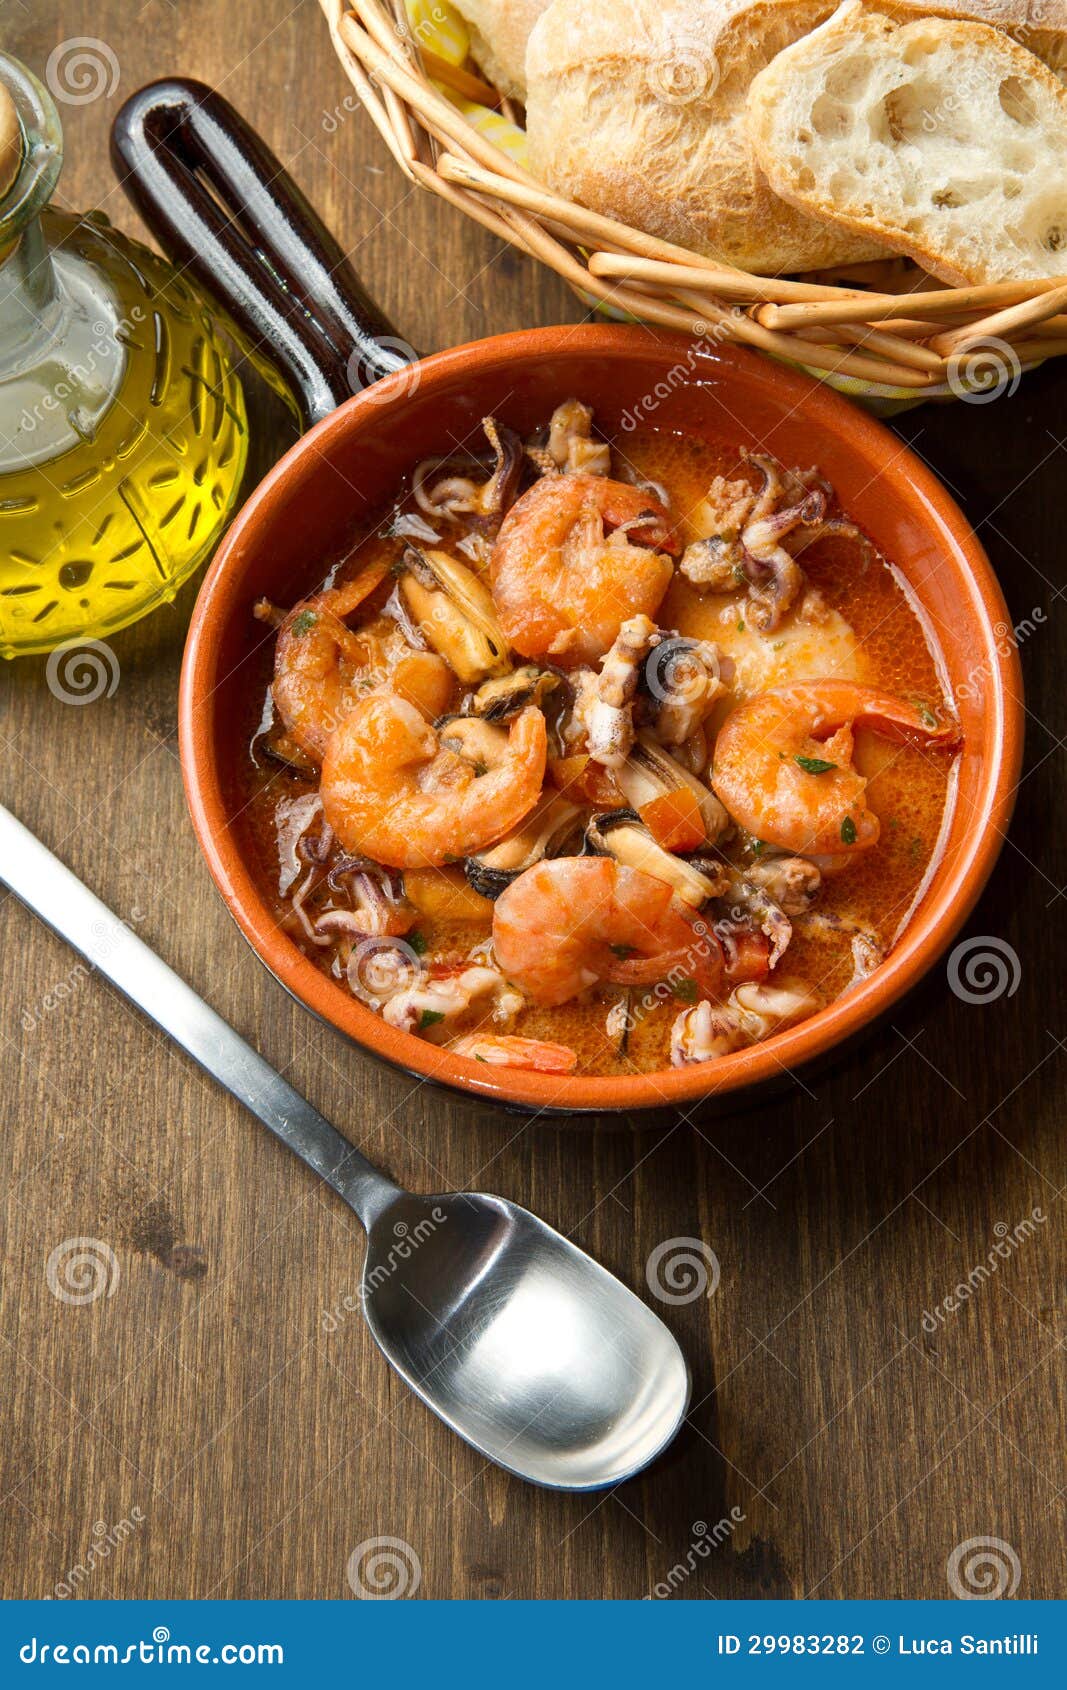 Seafood soup stock photo. Image of scallop, shrimp, basil - 29983282